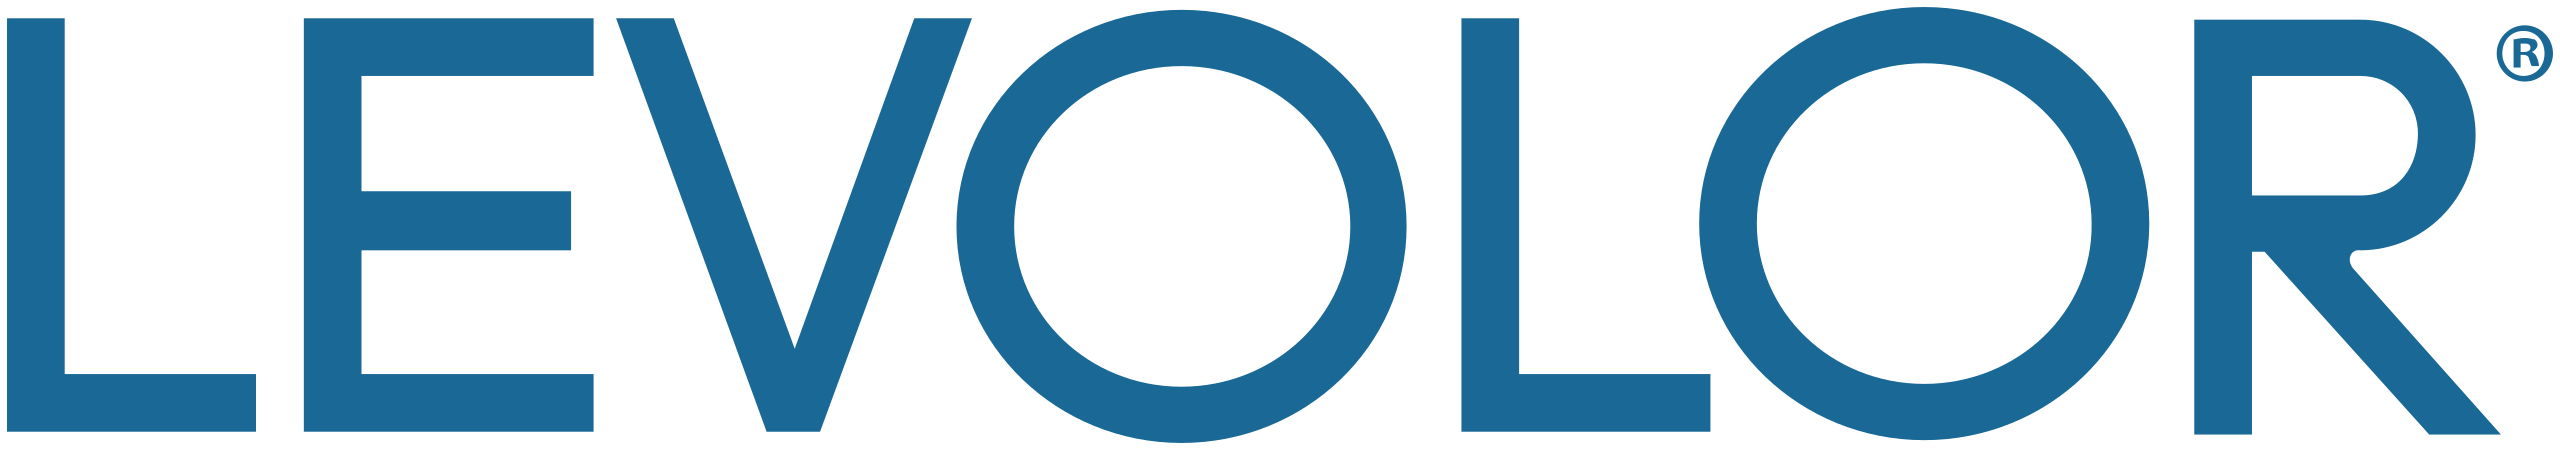 Levolor Logo